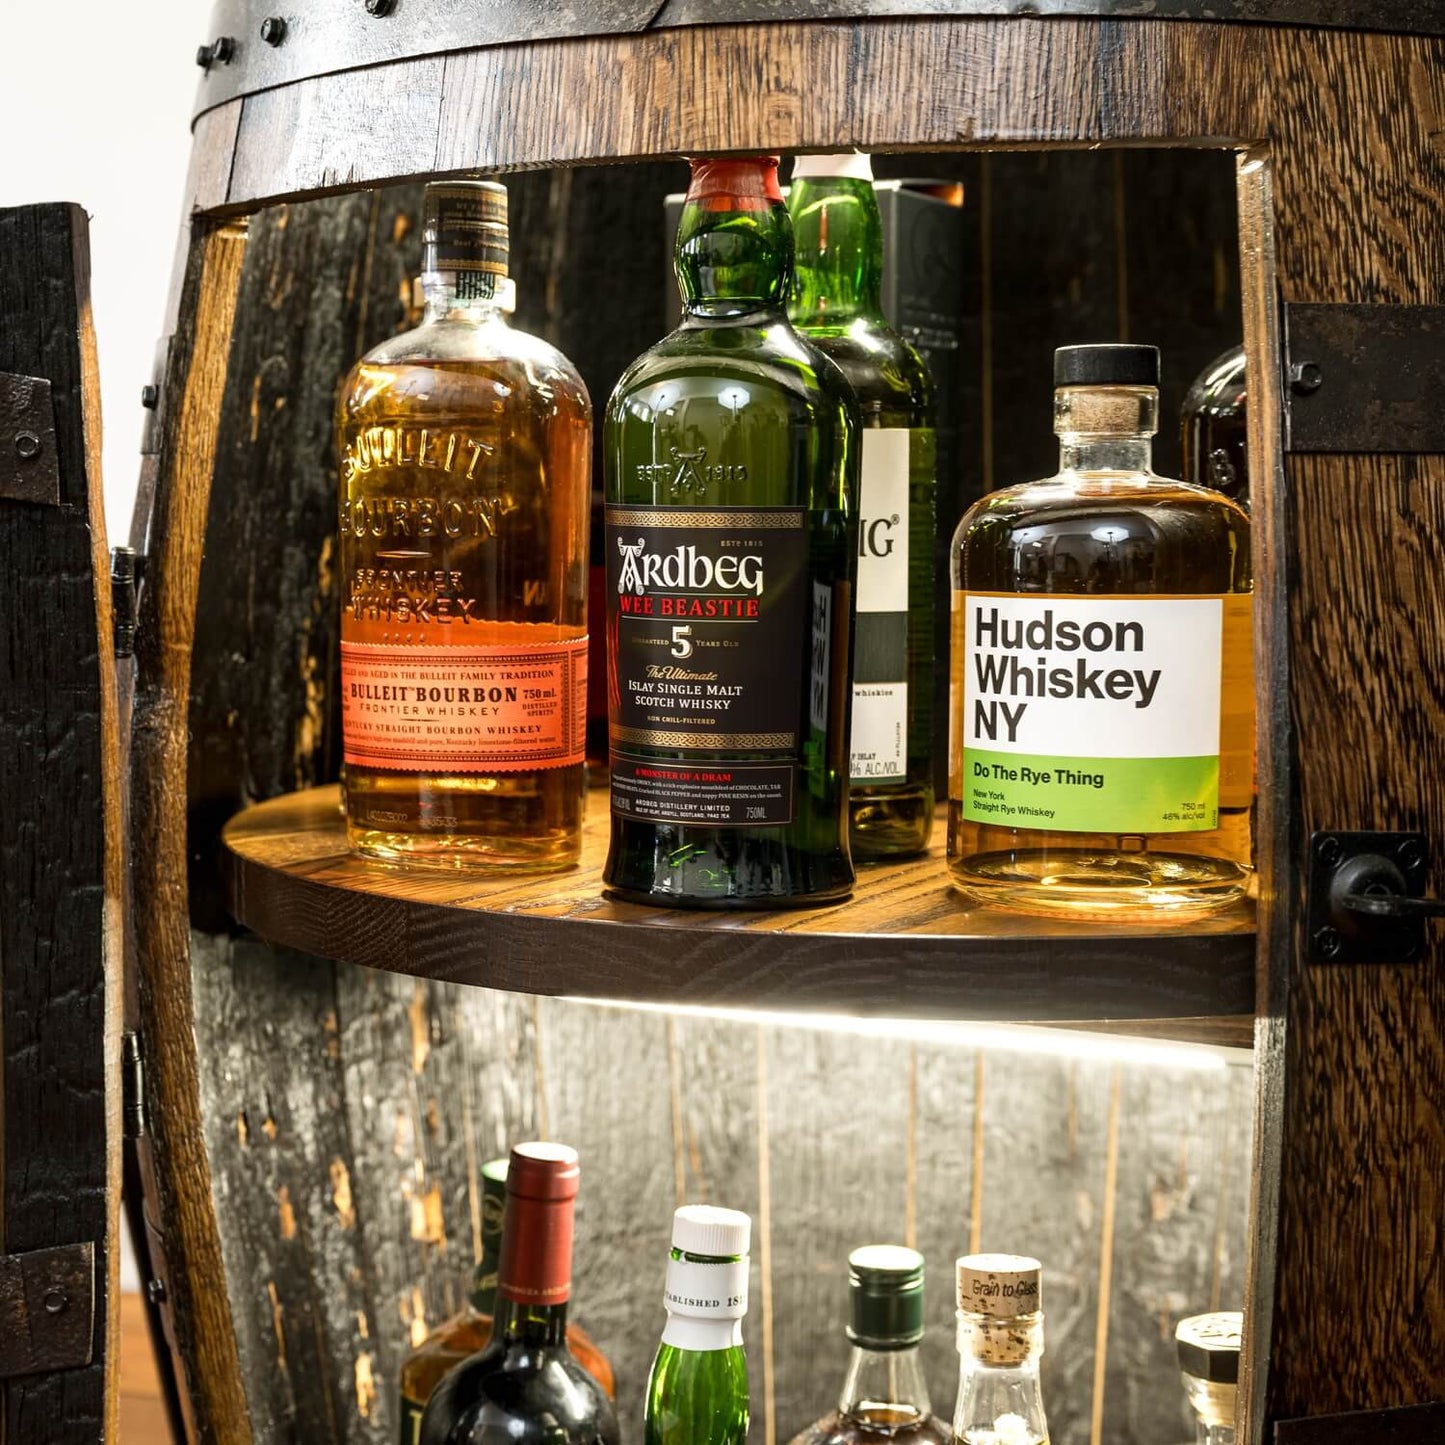 Deluxe Refurbished Whiskey Barrel Cabinet